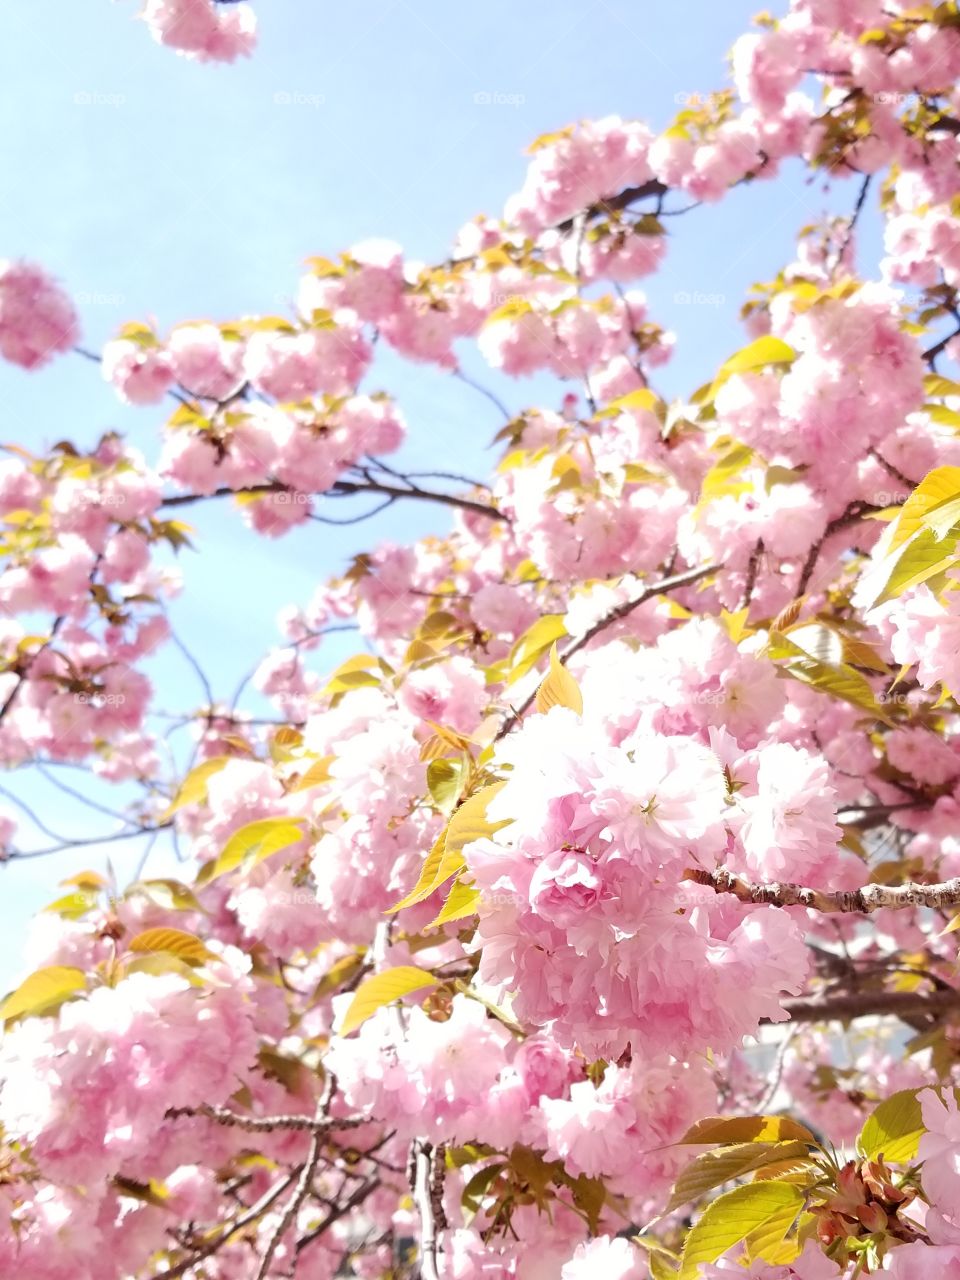 Kanzan flowering cherry tree in full bloom.